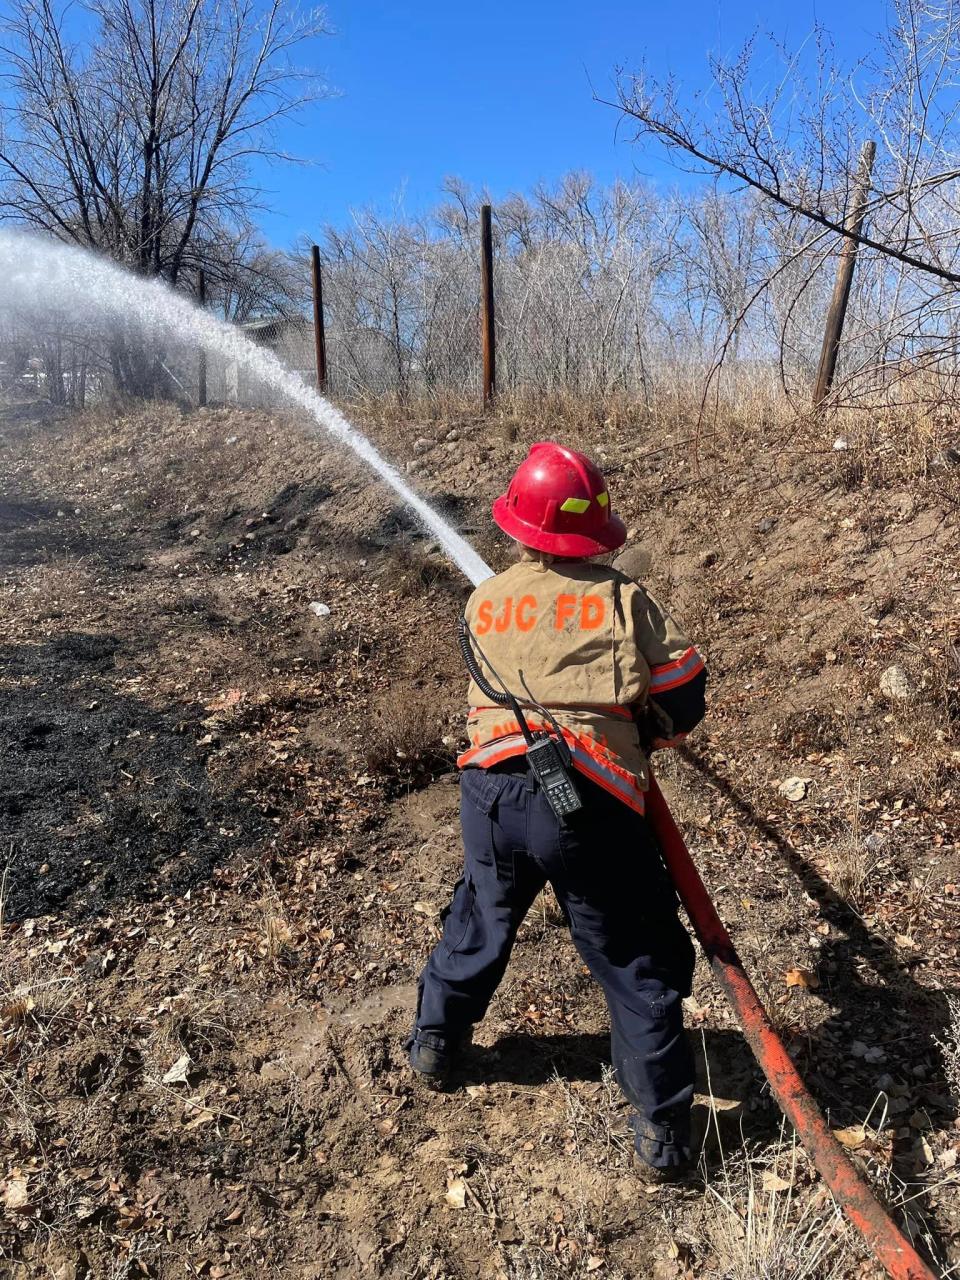 A San Juan County firefighter sprays water on a wildland blaze near County Road 3050 on Feb. 19.